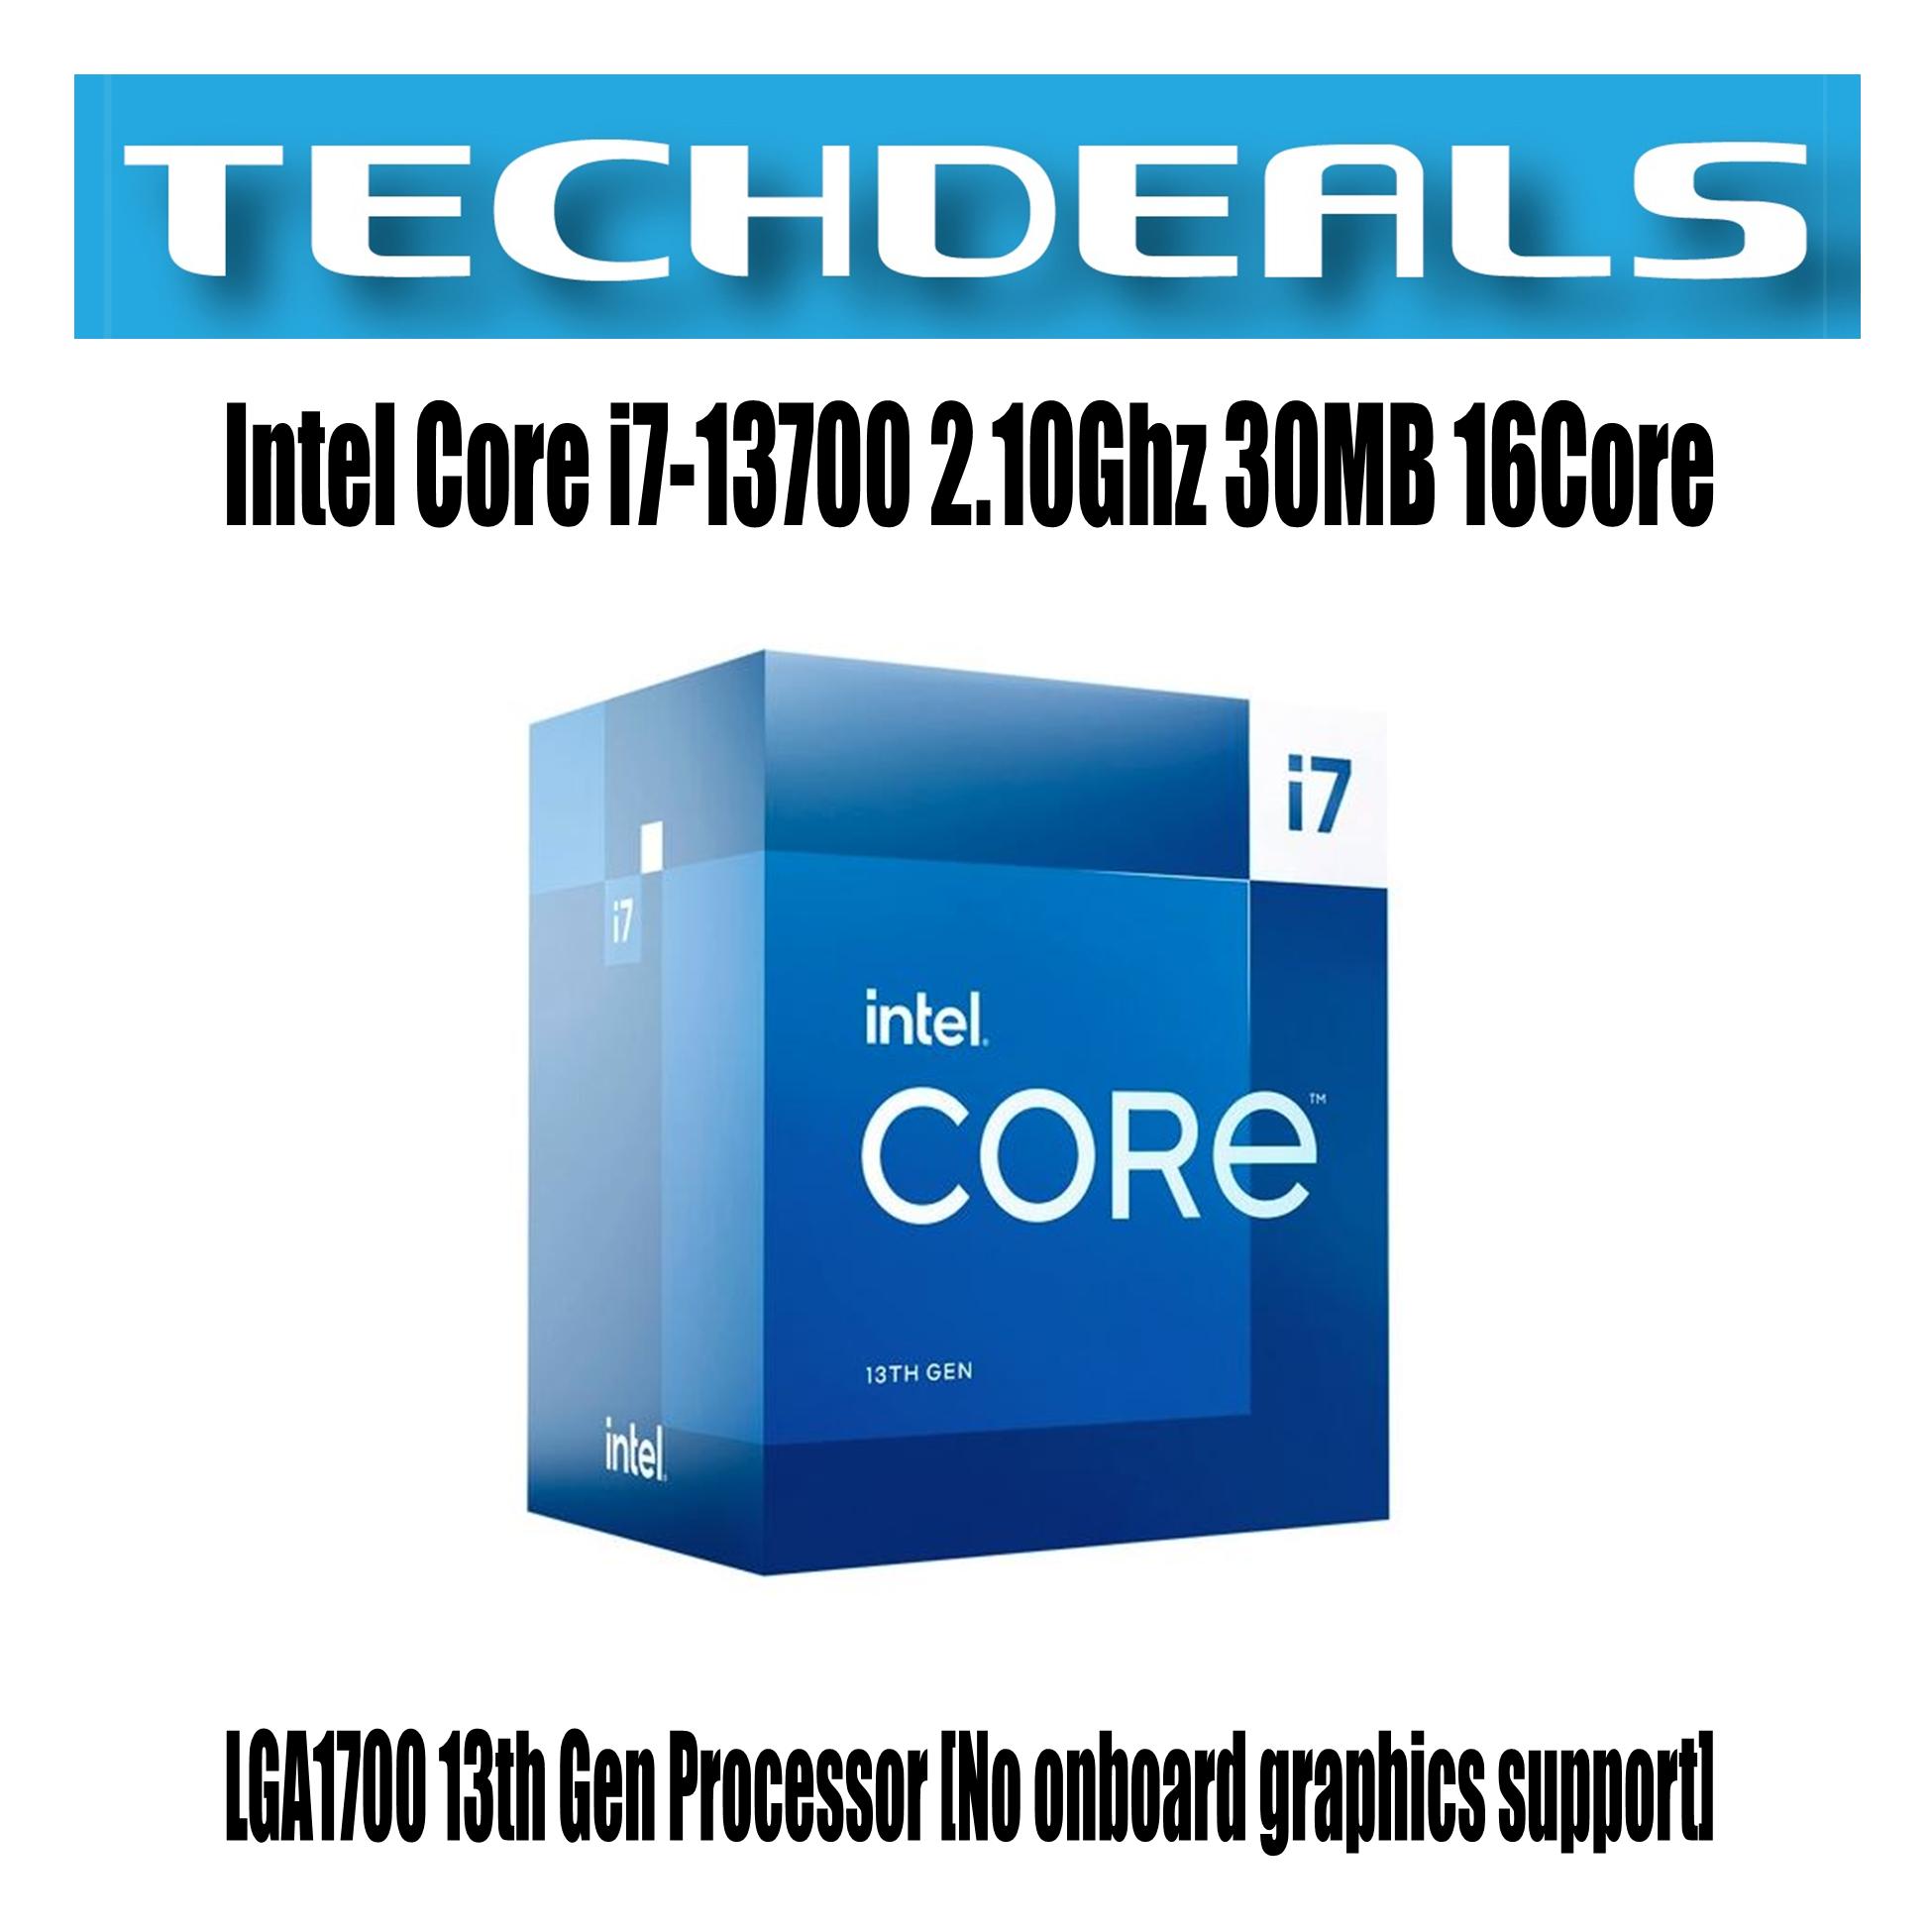 Intel Core i7-13700 2.10Ghz 30MB 16Core 24T LGA1700 13th Gen